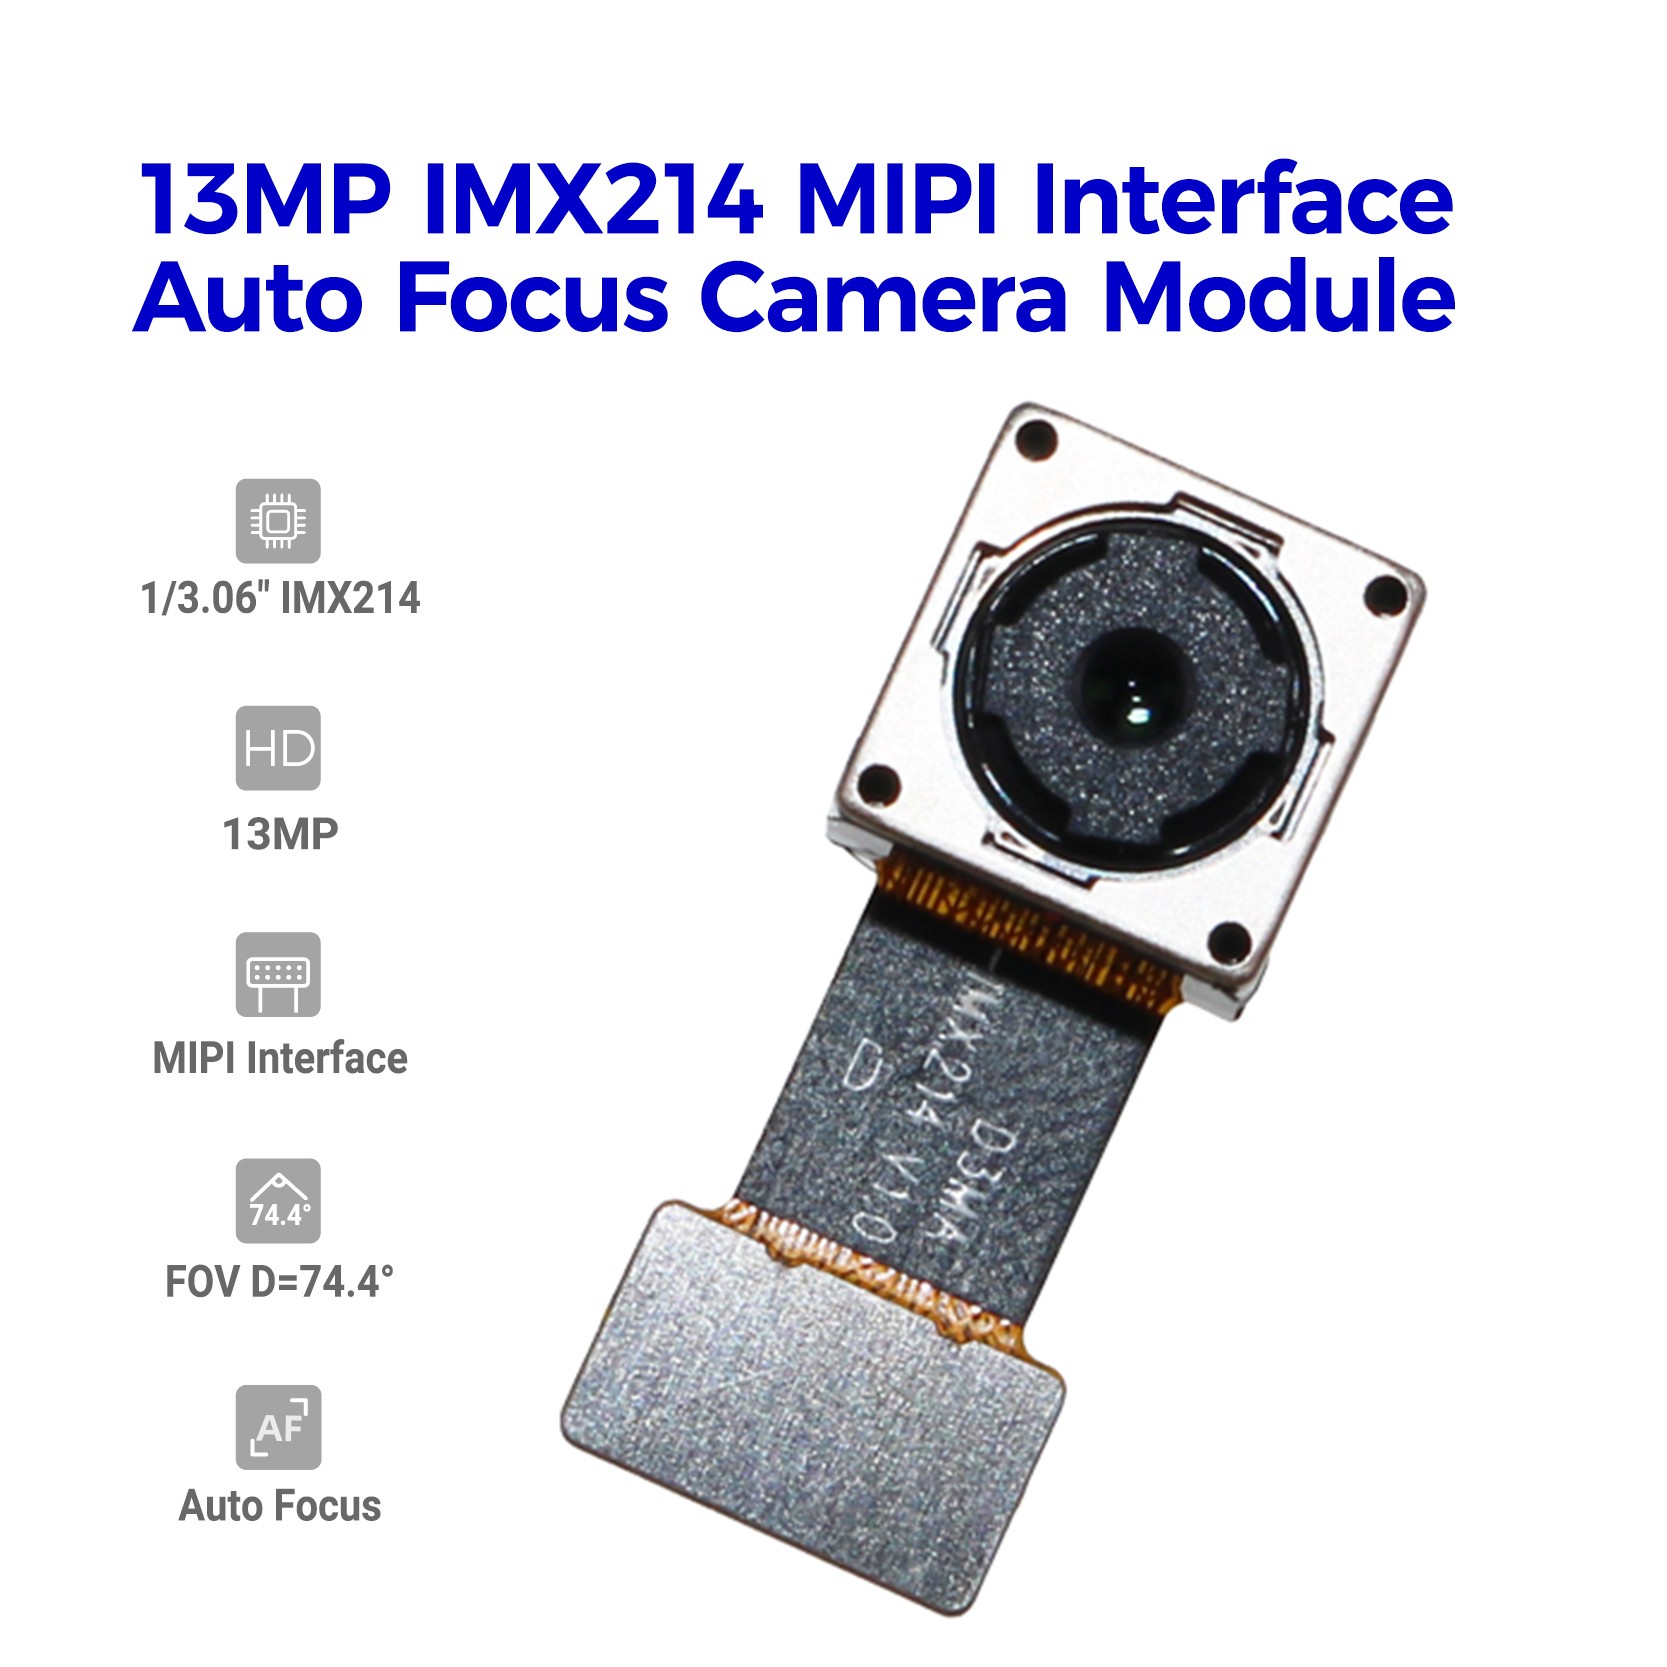 13MP IMX214 Sony Sensor AF MIPI Camera Module Featured Image